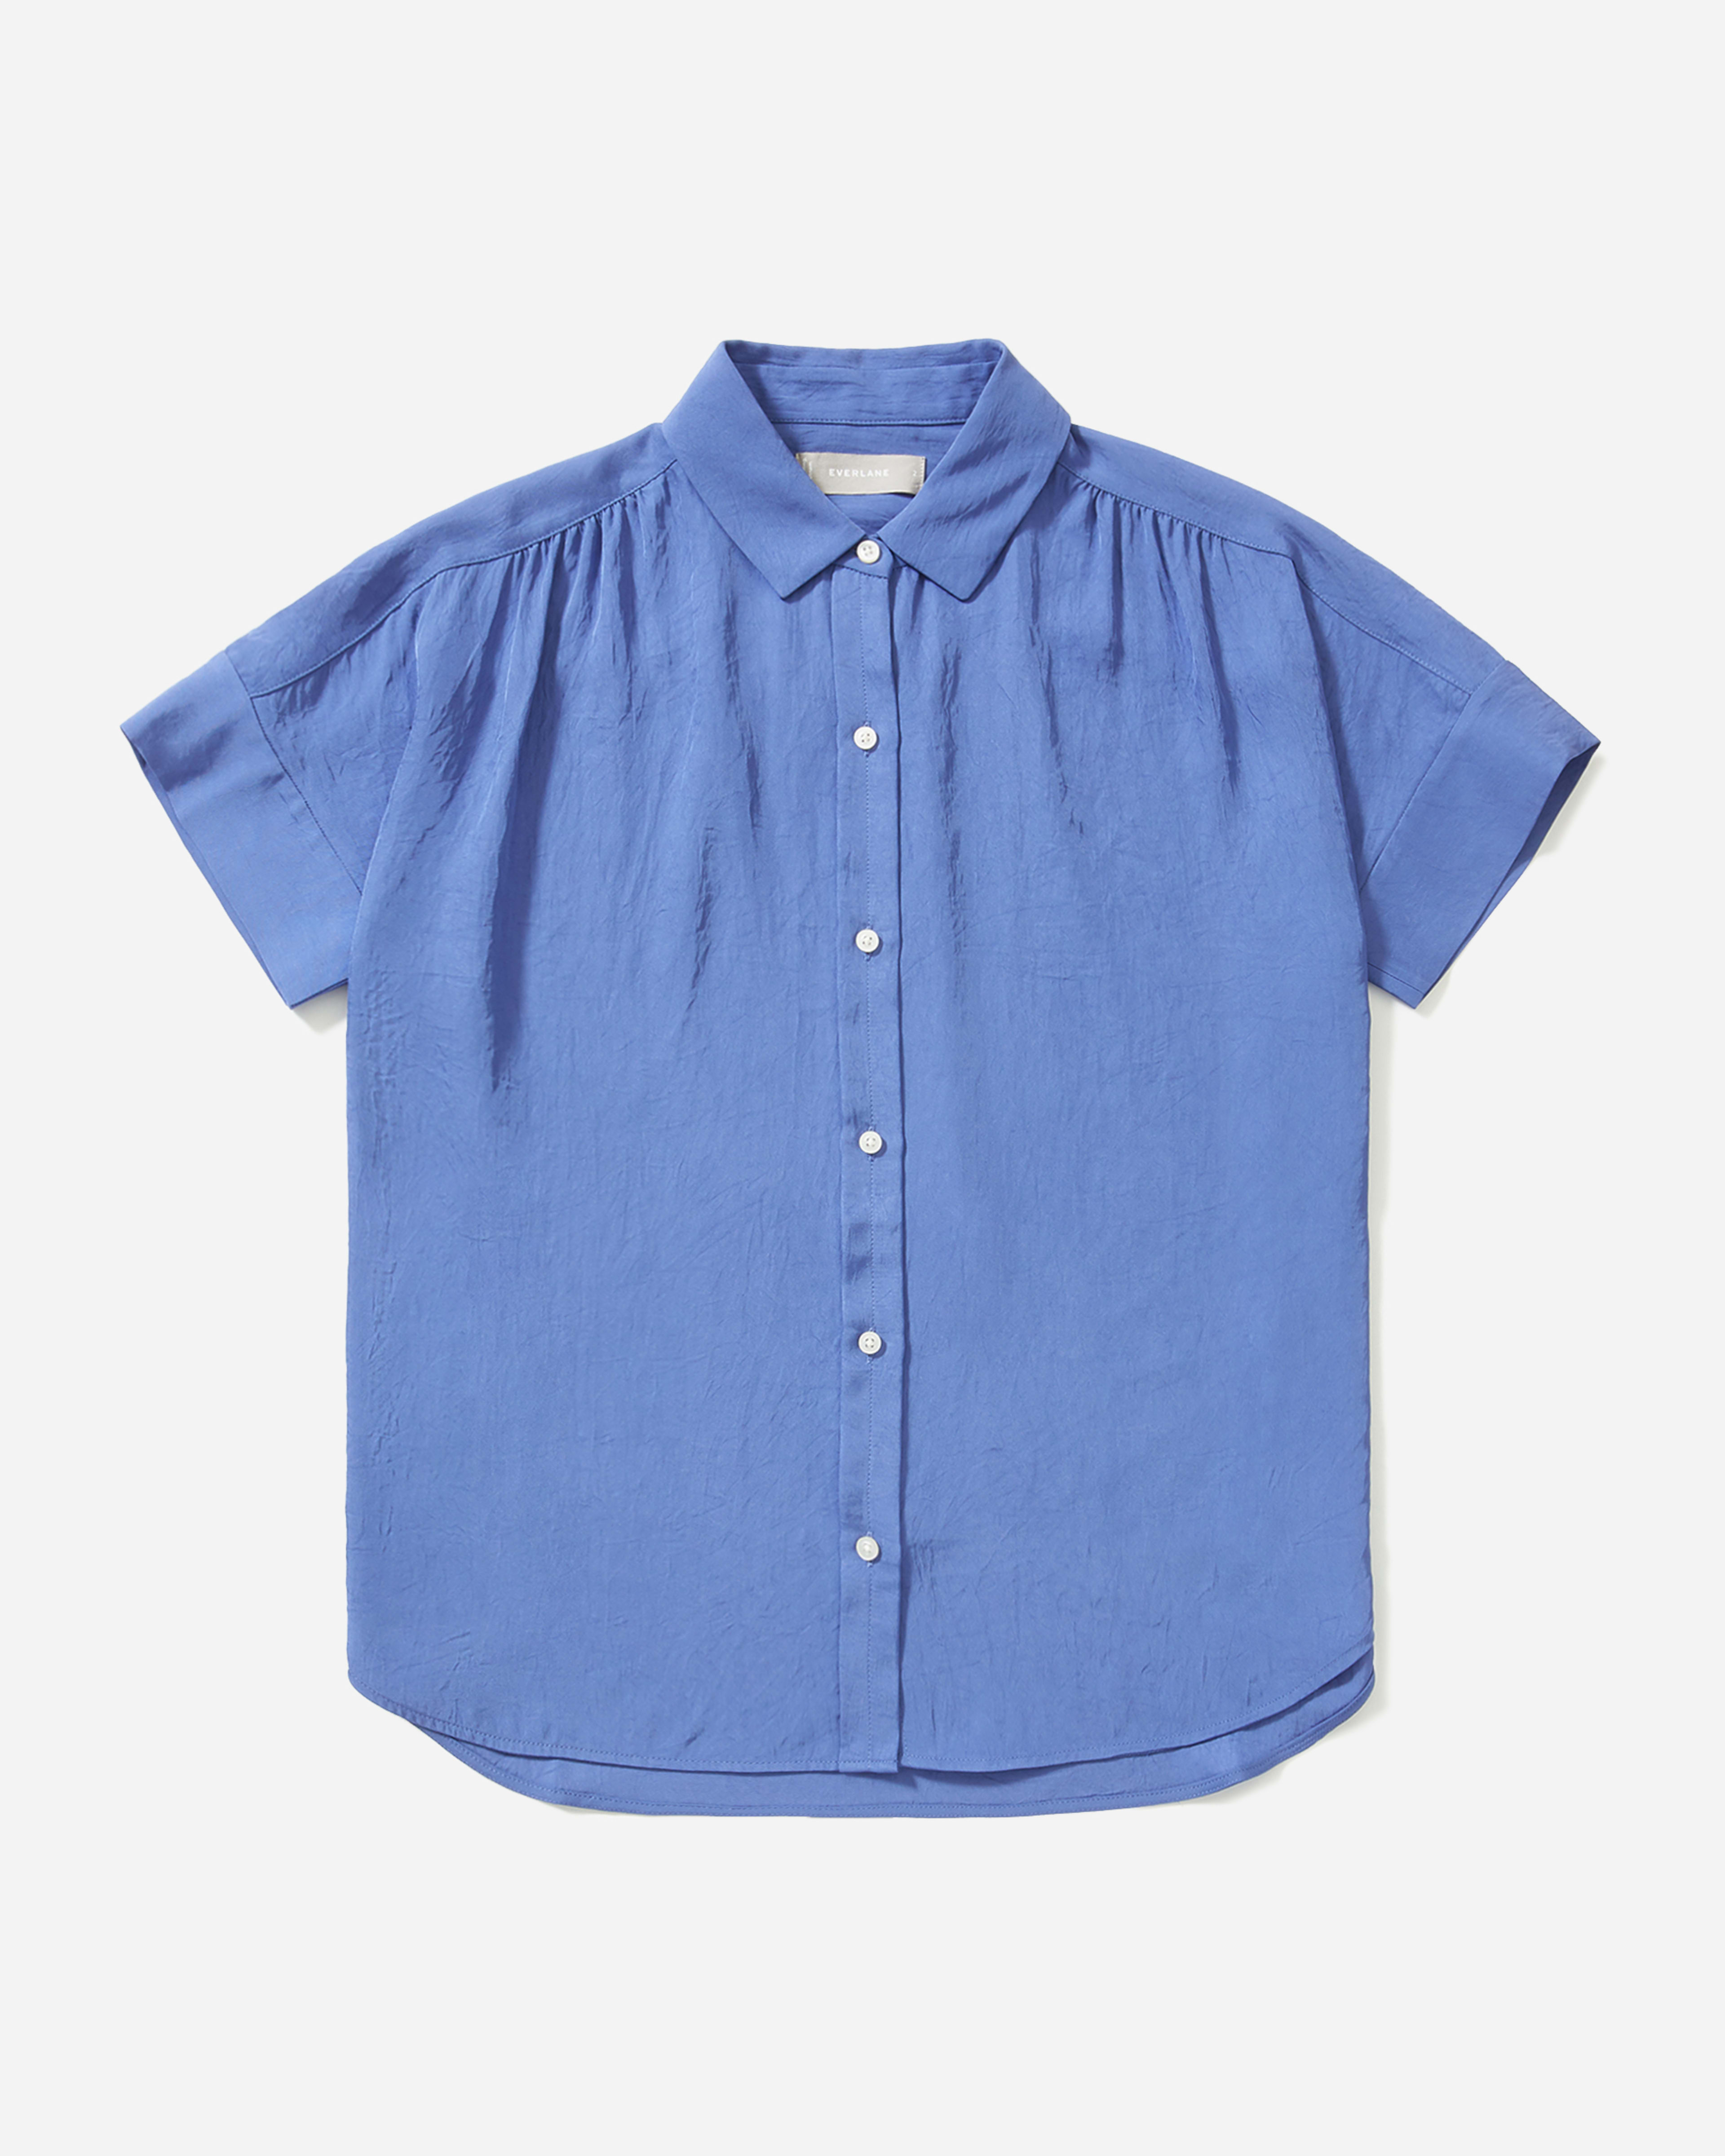 The Japanese GoWeave Light Square Shirt Steel Blue – Everlane